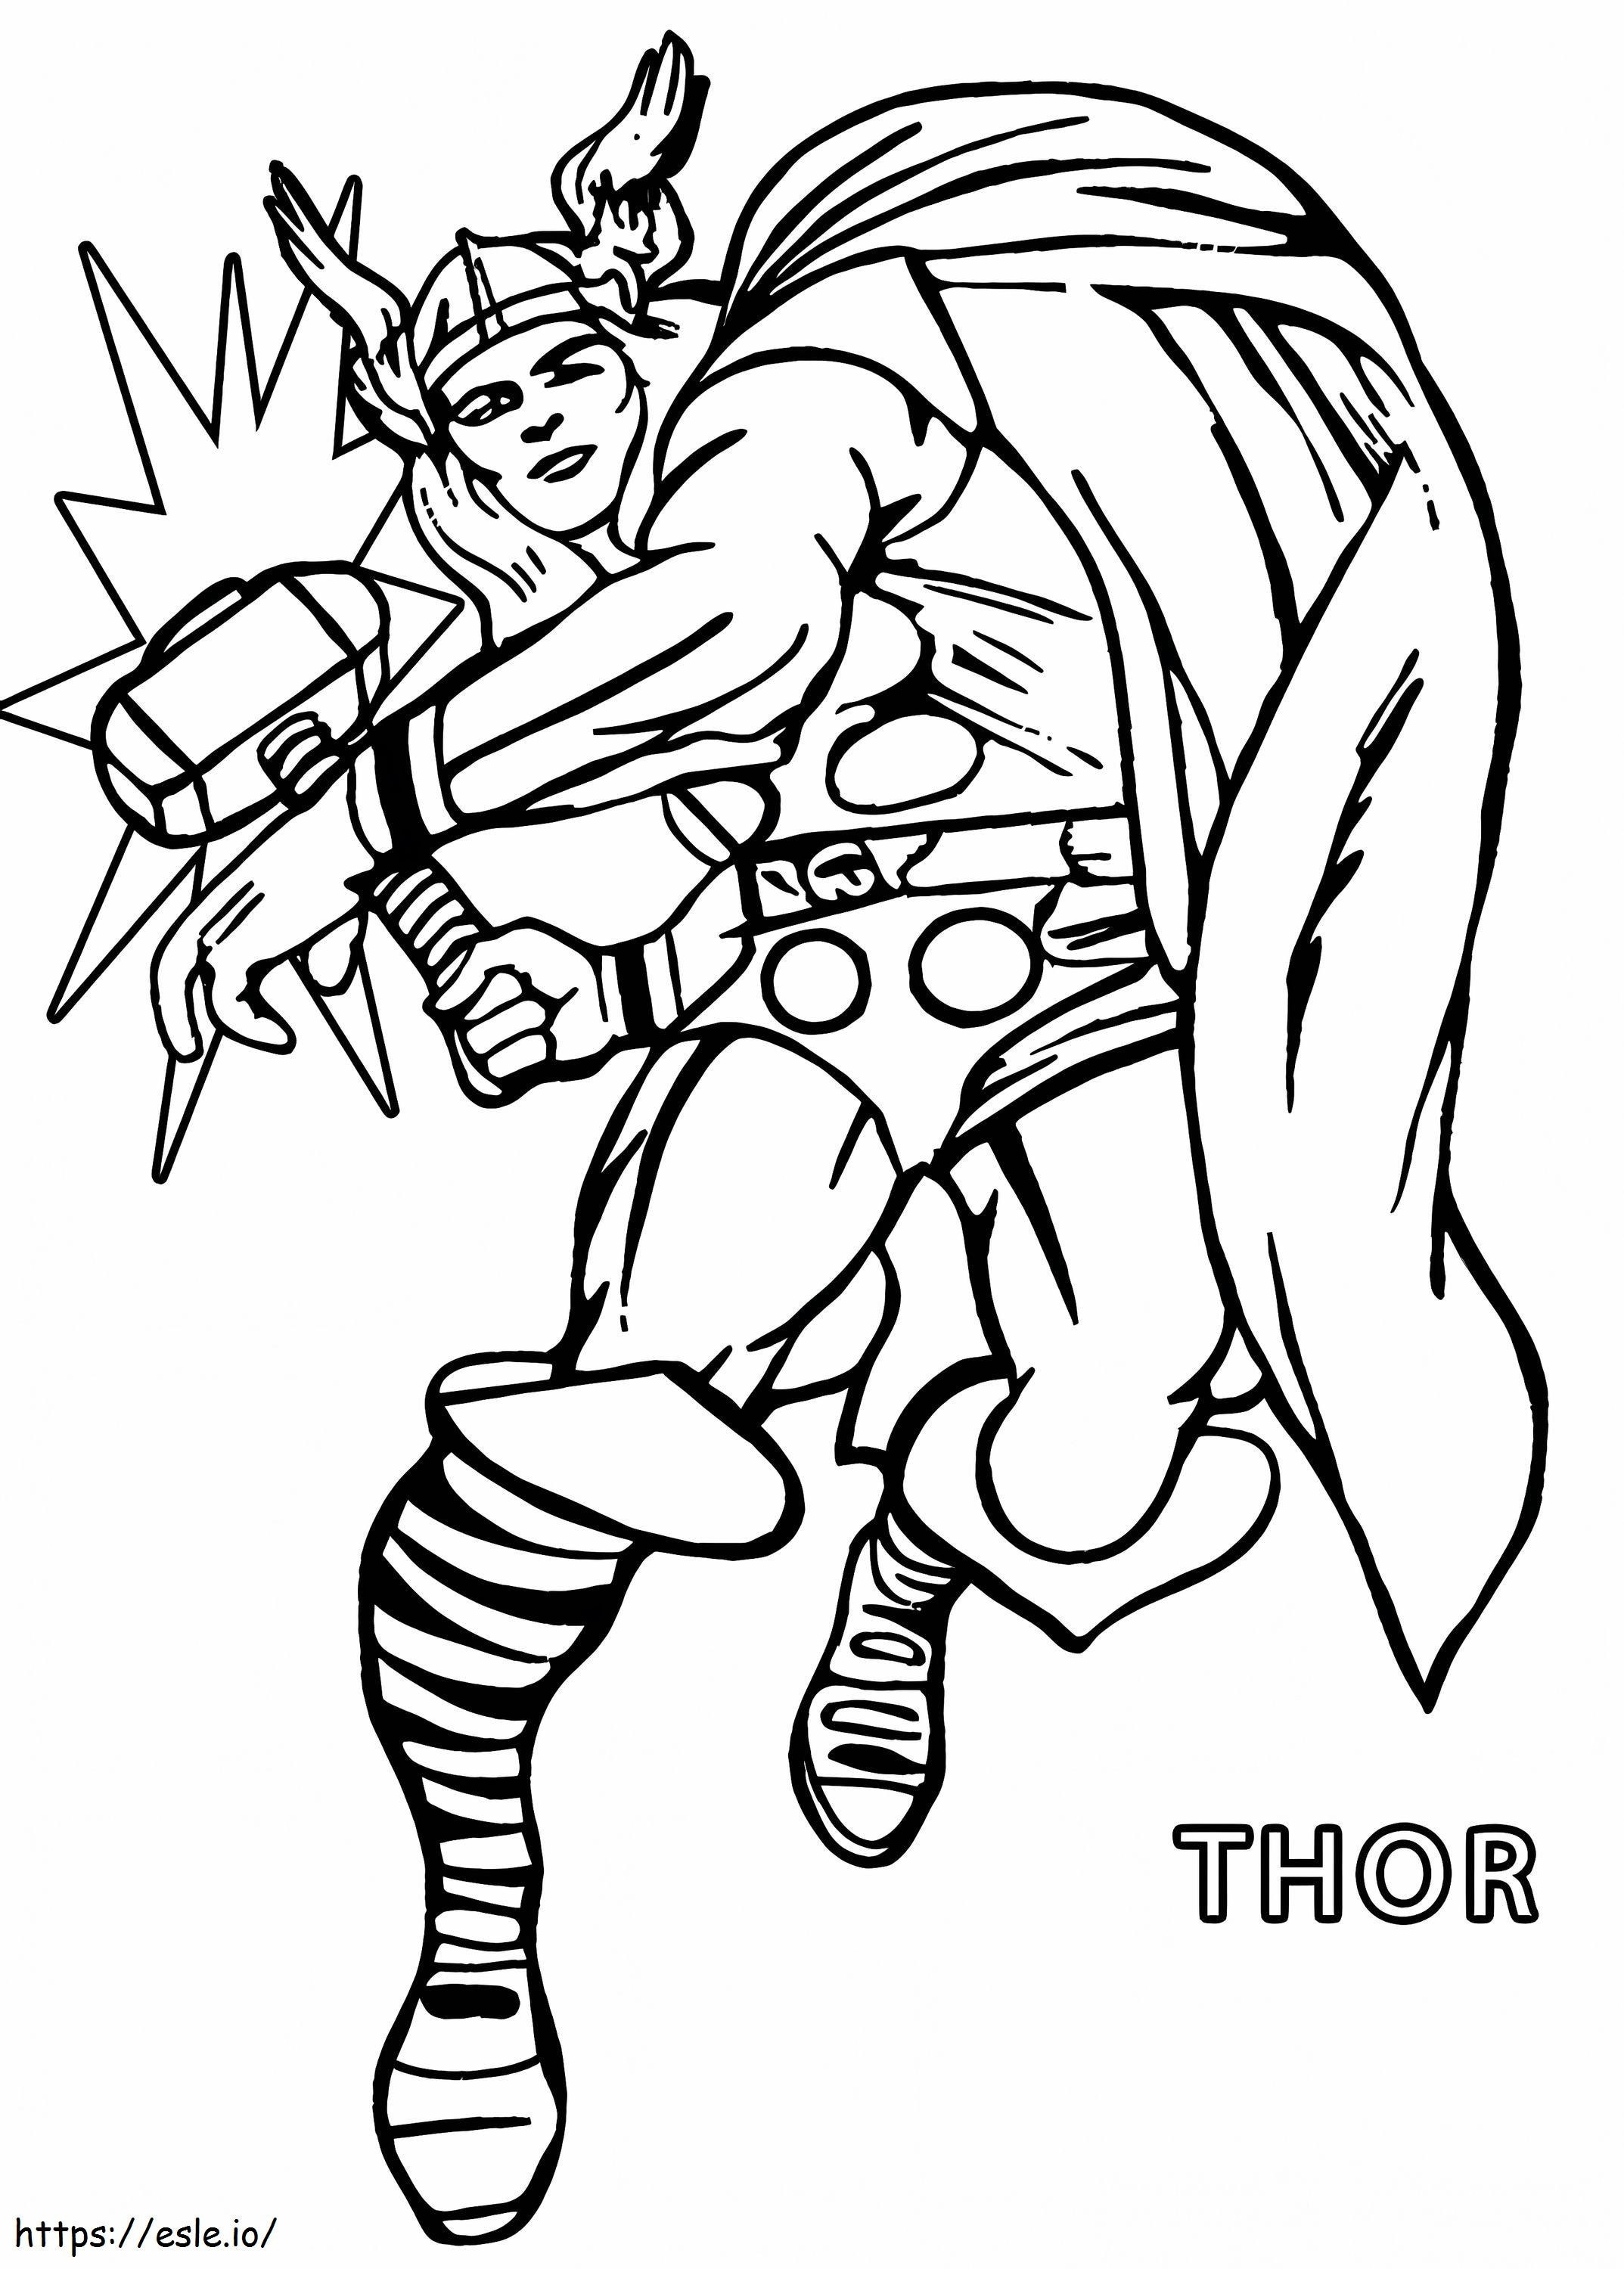 Coloriage Attaque de Thor 733X1024 à imprimer dessin